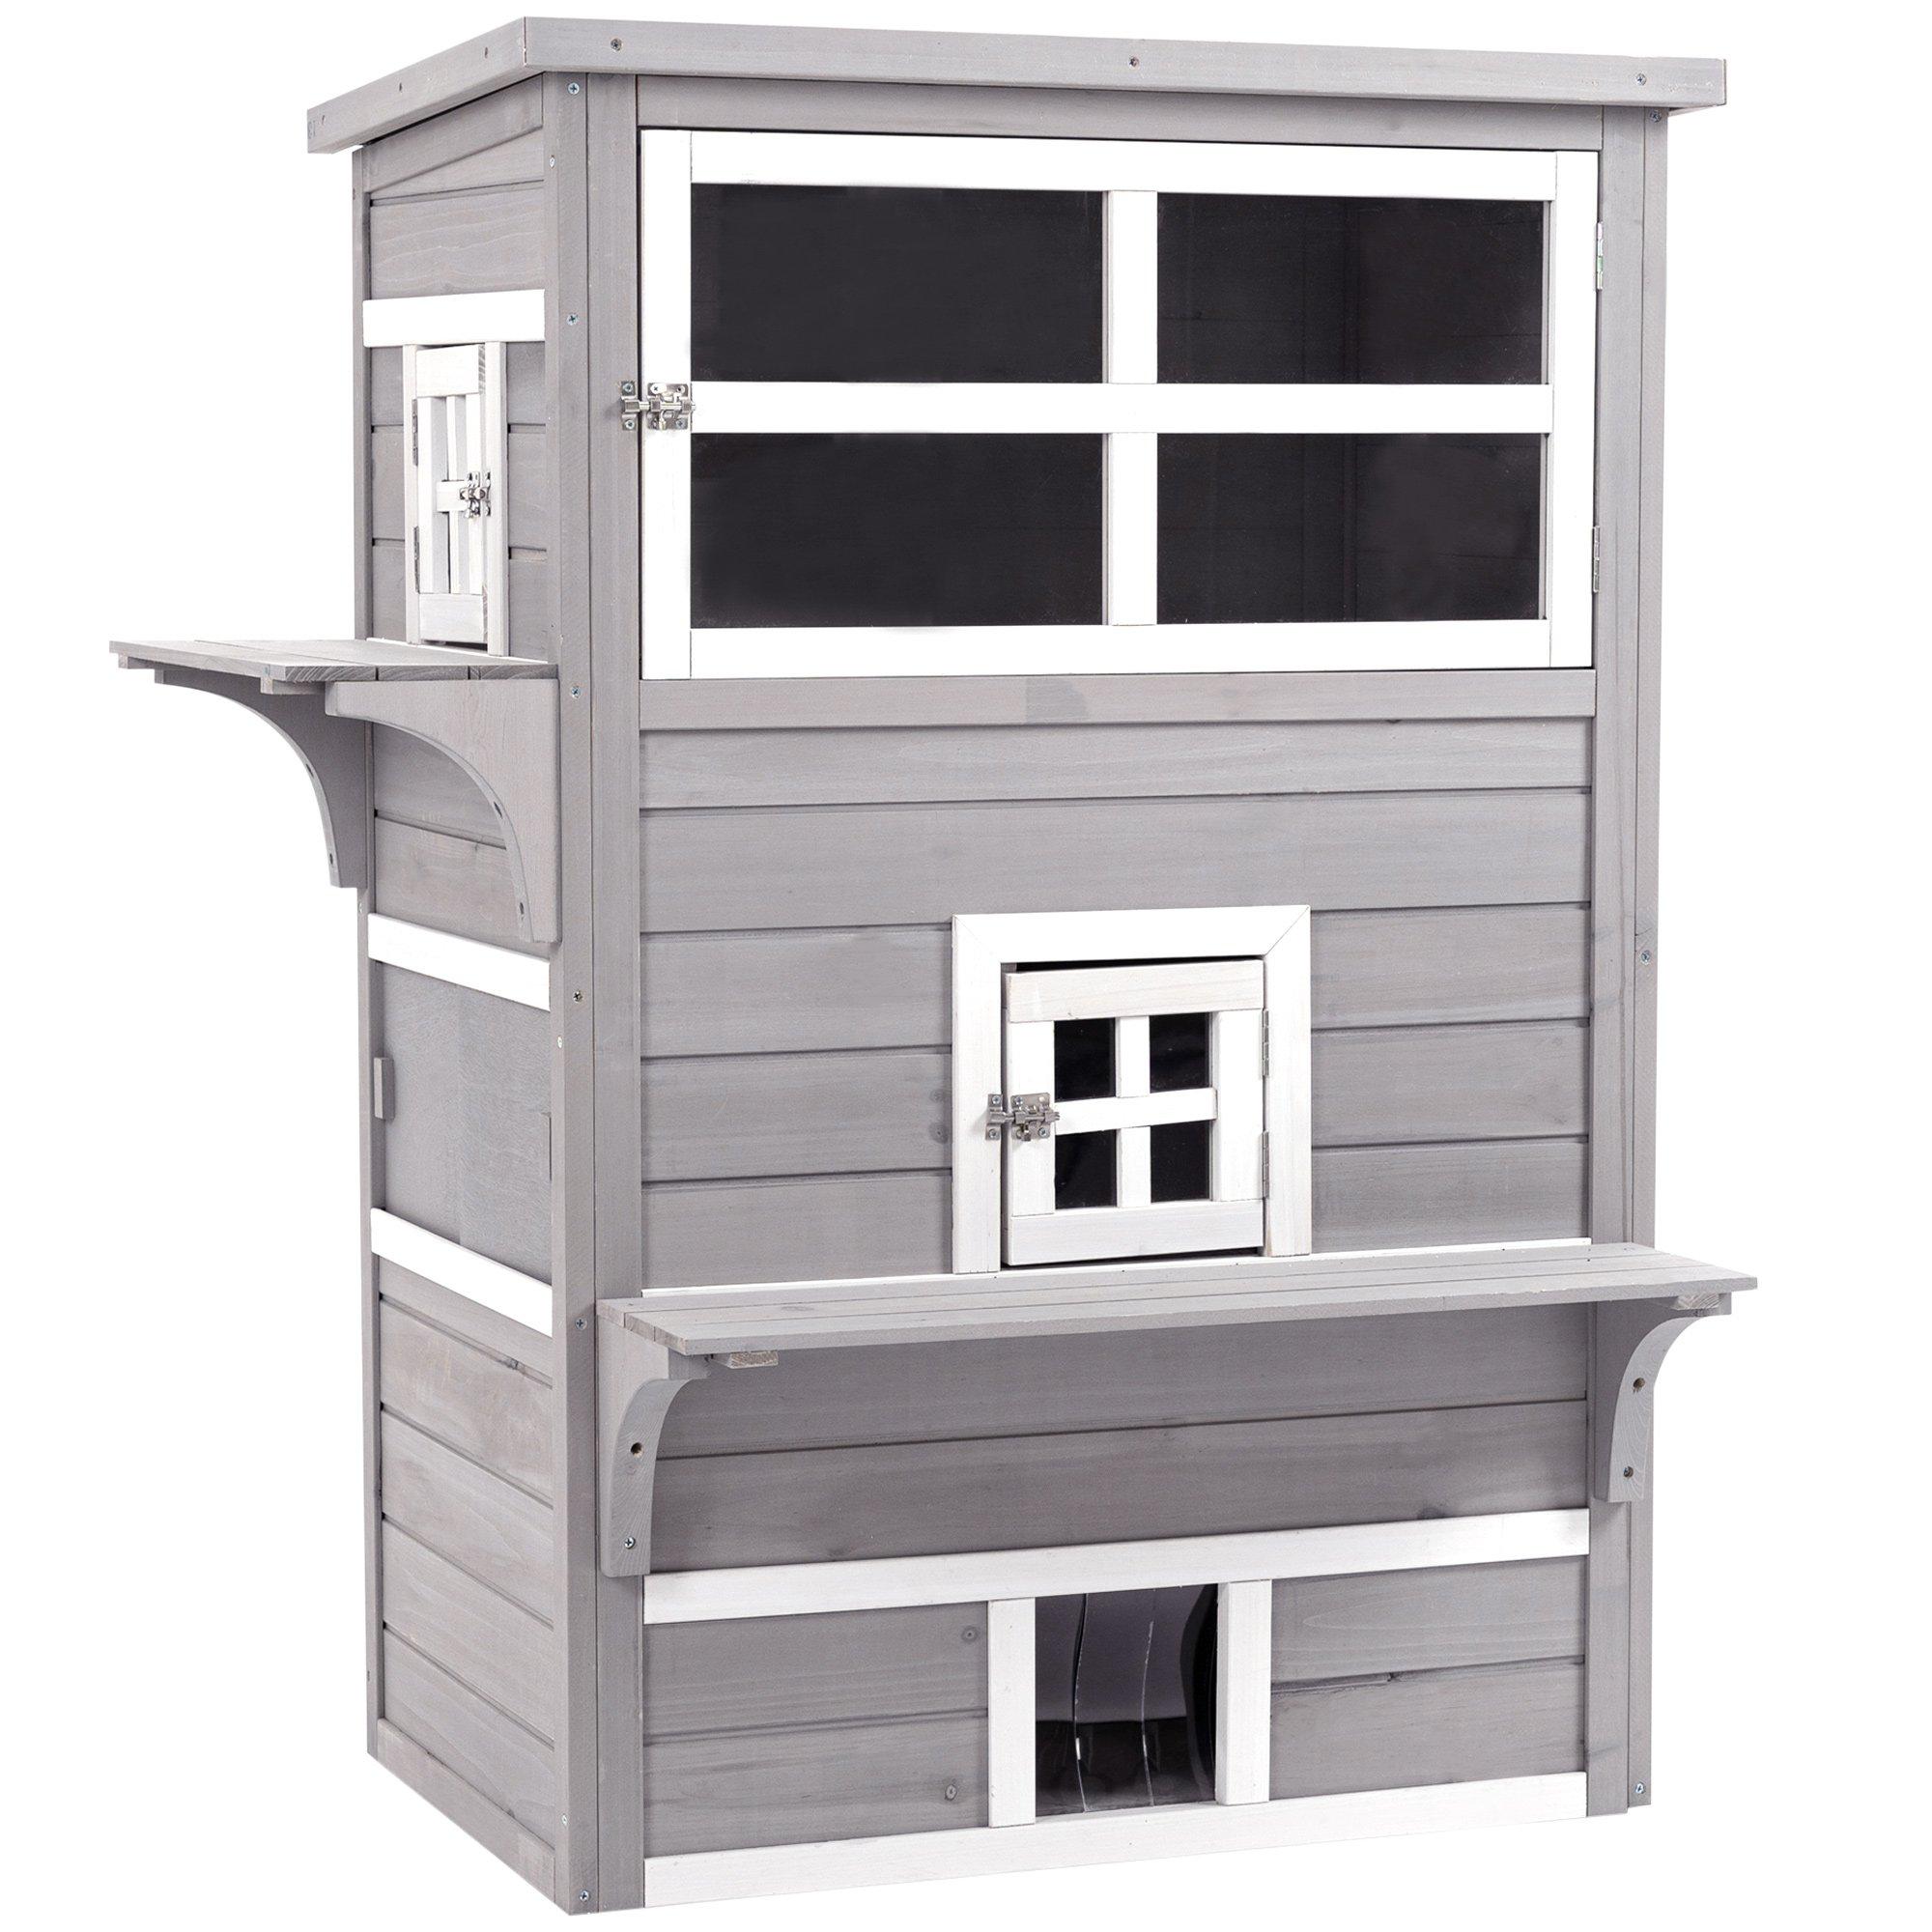 3 Tier Outdoor Cat House with Jumping Platforms, Asphalt Roof, Doors, Grey